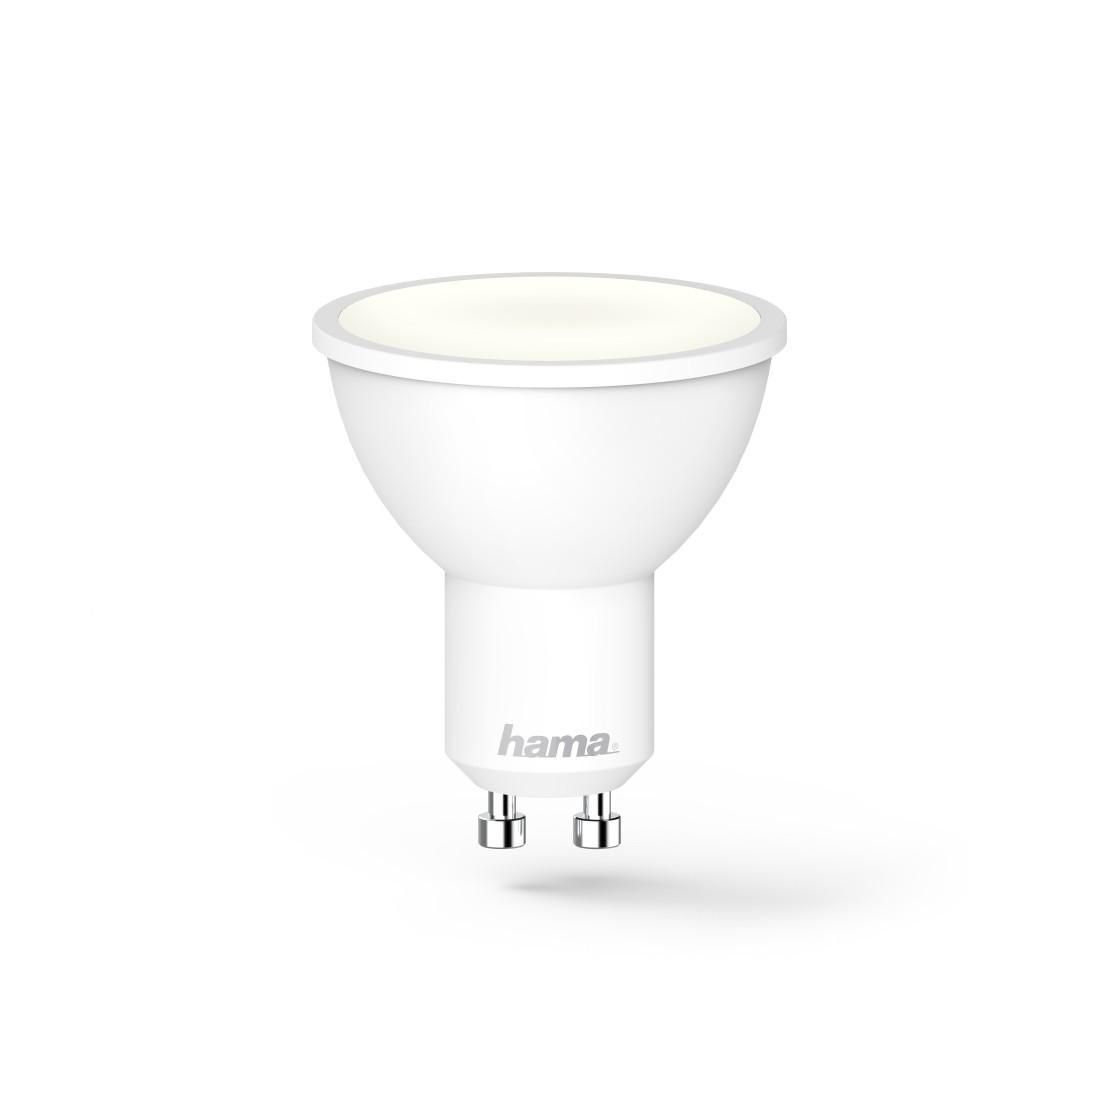 Hama 176601 W128328293 1 Energy-Saving Lamp 5.5 W 